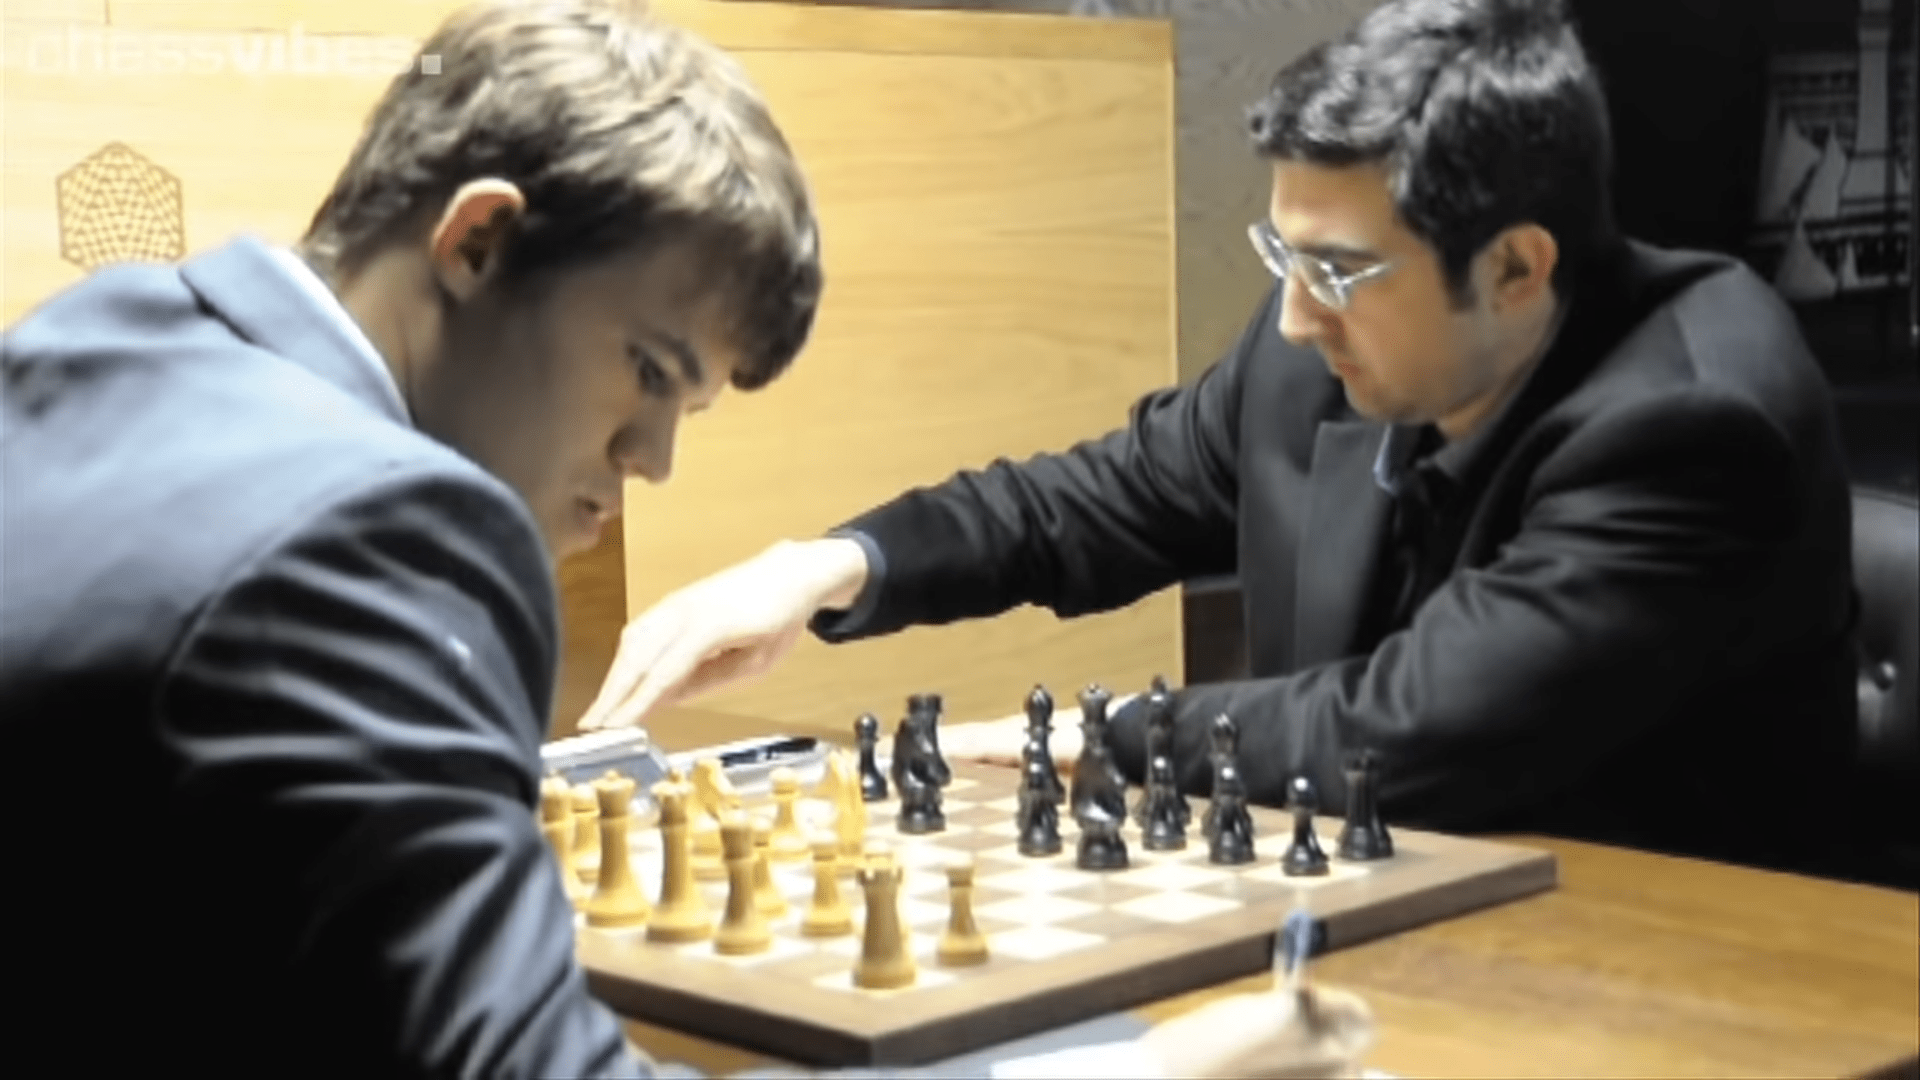 Alexander Alekhine - The Ultimate Chess Thinker - Henry Chess Sets